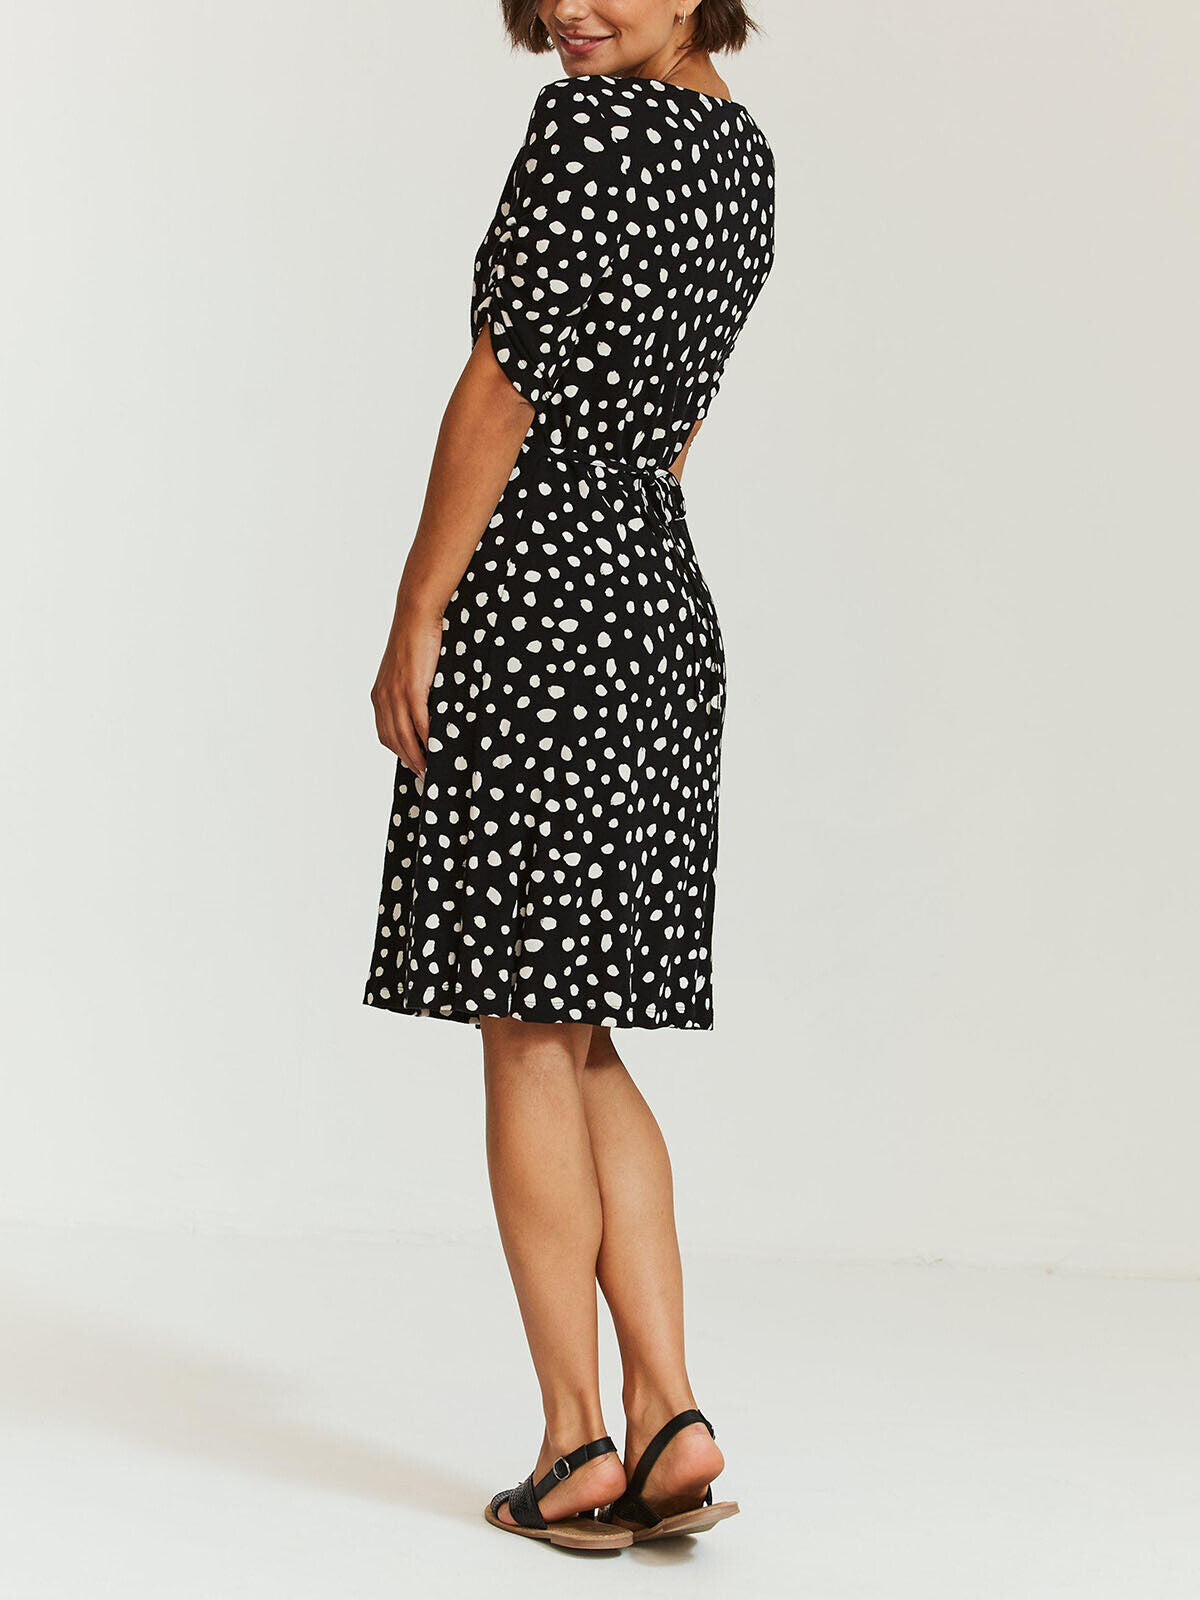 EX Fat Face Black Delilah Double Spot Dress in Sizes 8, 10, 12, 14, 16 RRP £46